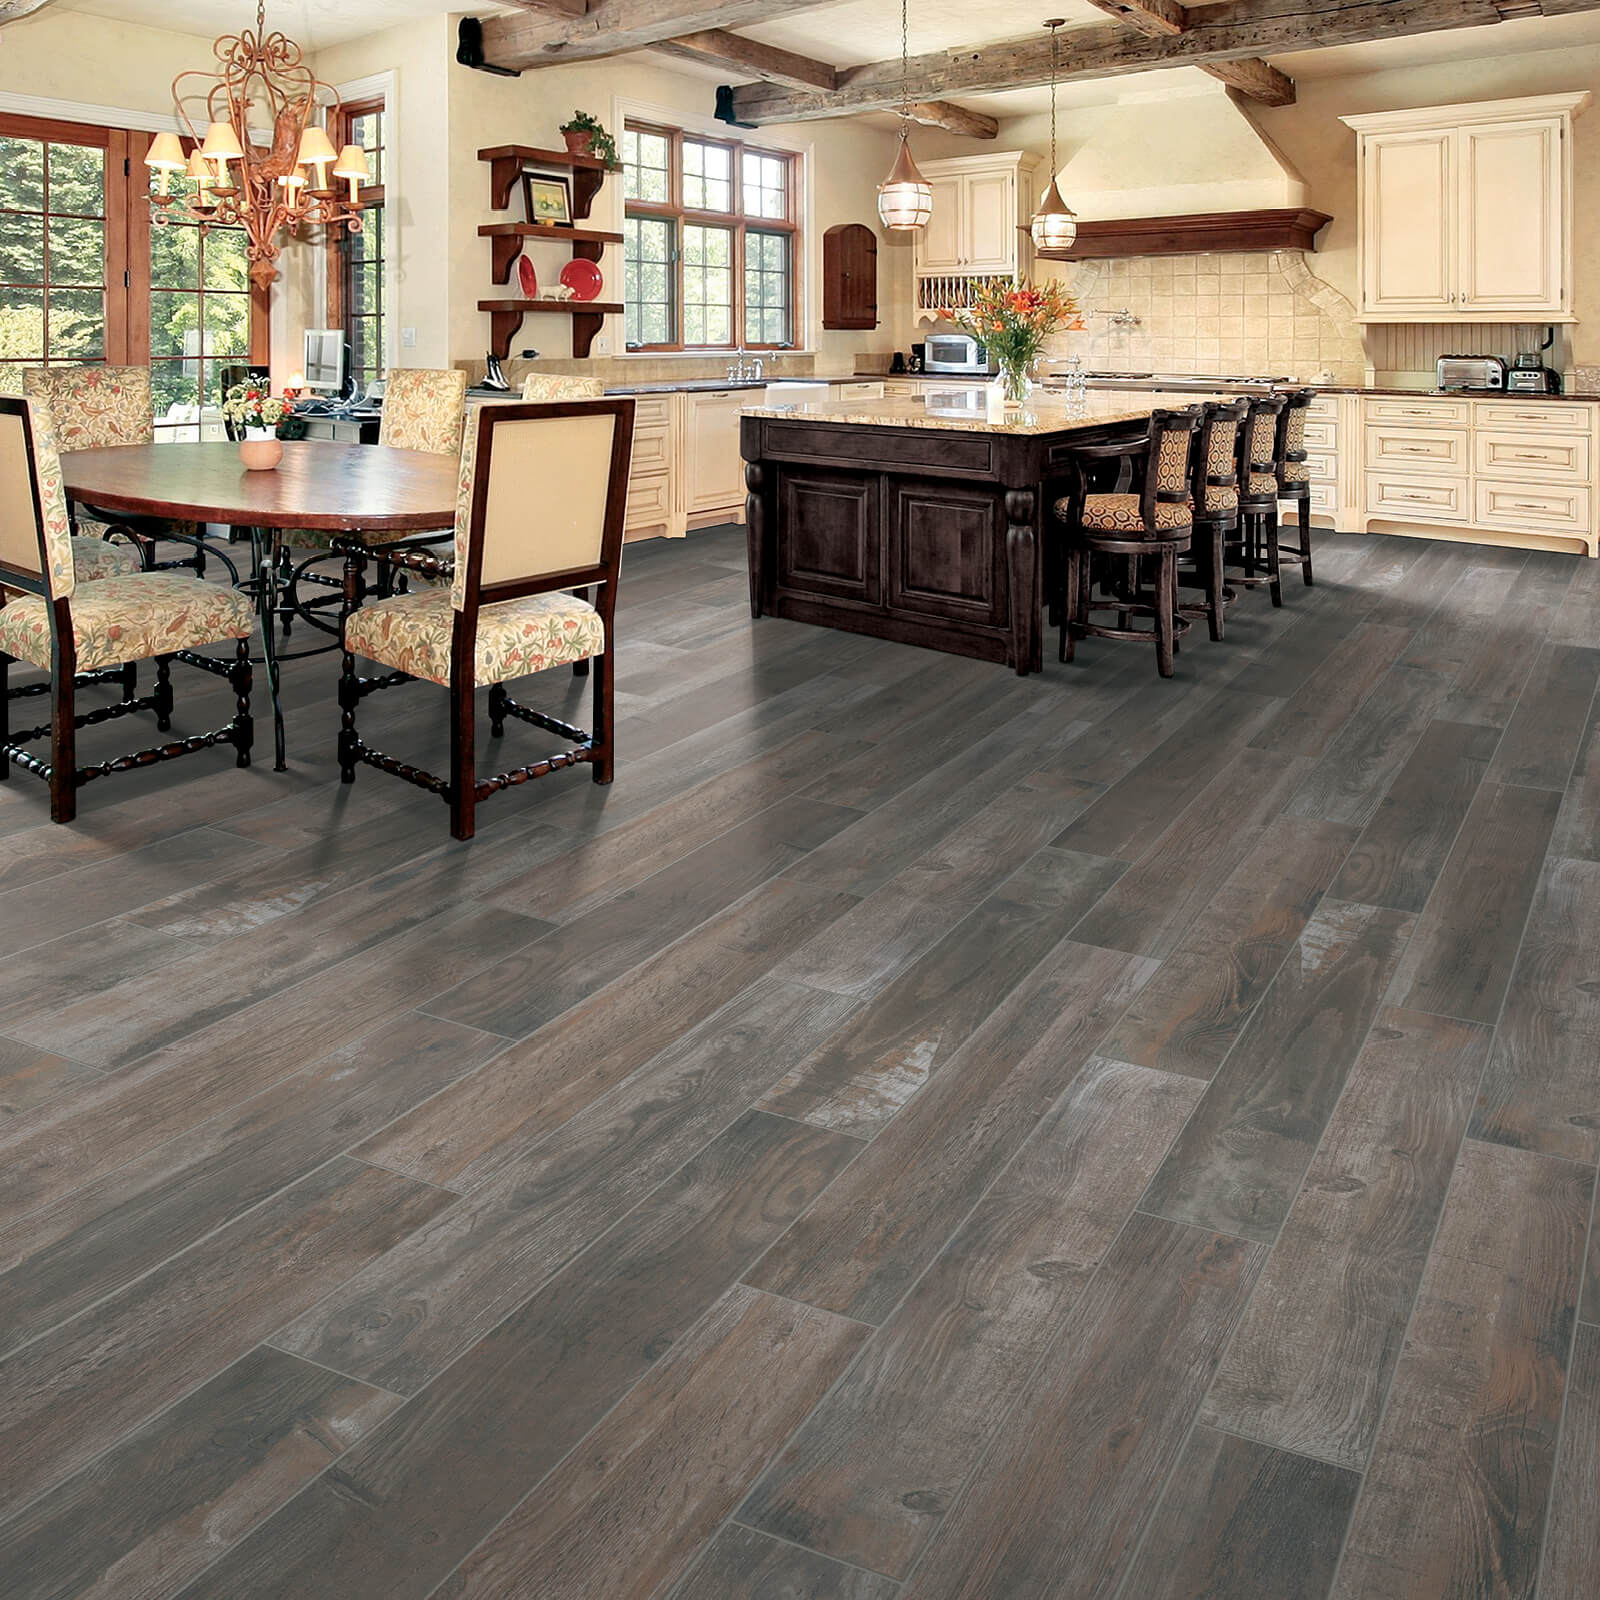 Dark hardwood flooring | Bobs Discount Carpet Inc